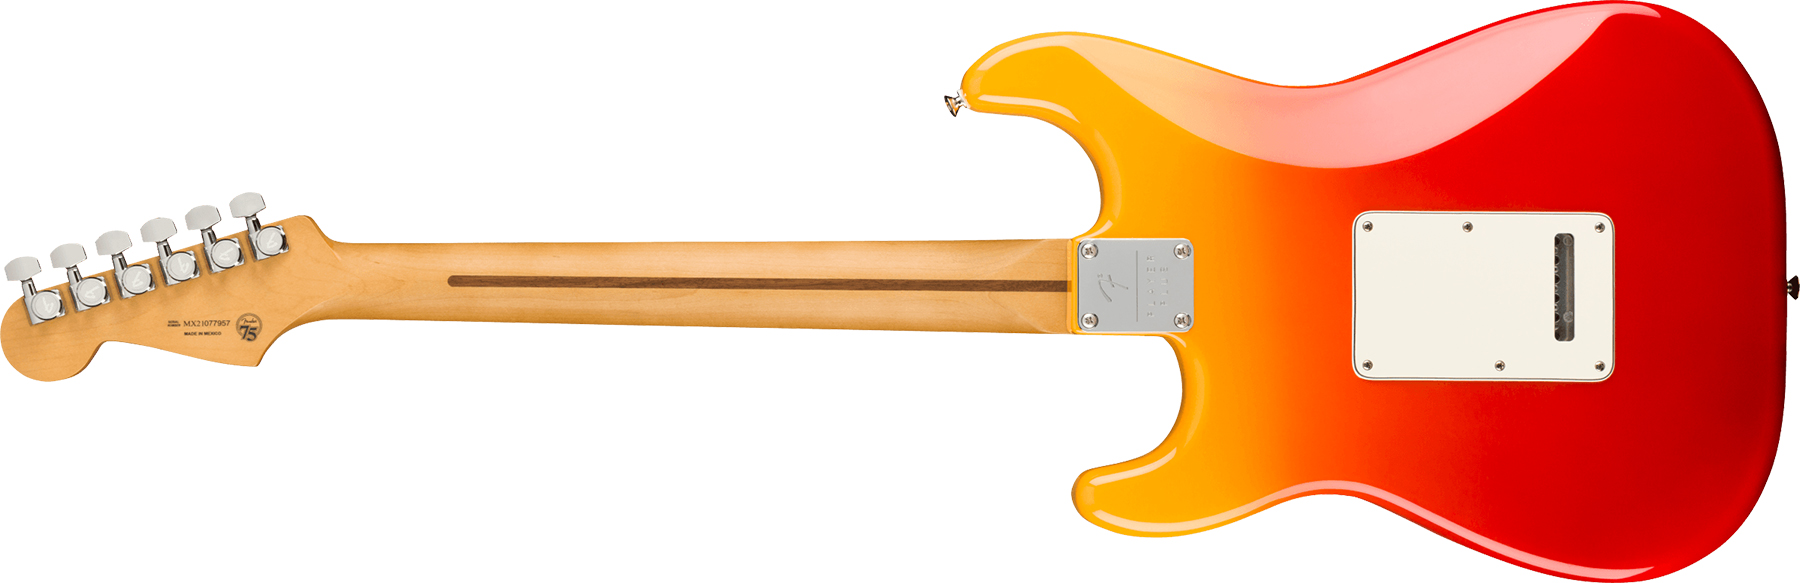 Fender Strat Player Plus Mex 3s Trem Mn - Tequila Sunrise - Str shape electric guitar - Variation 1